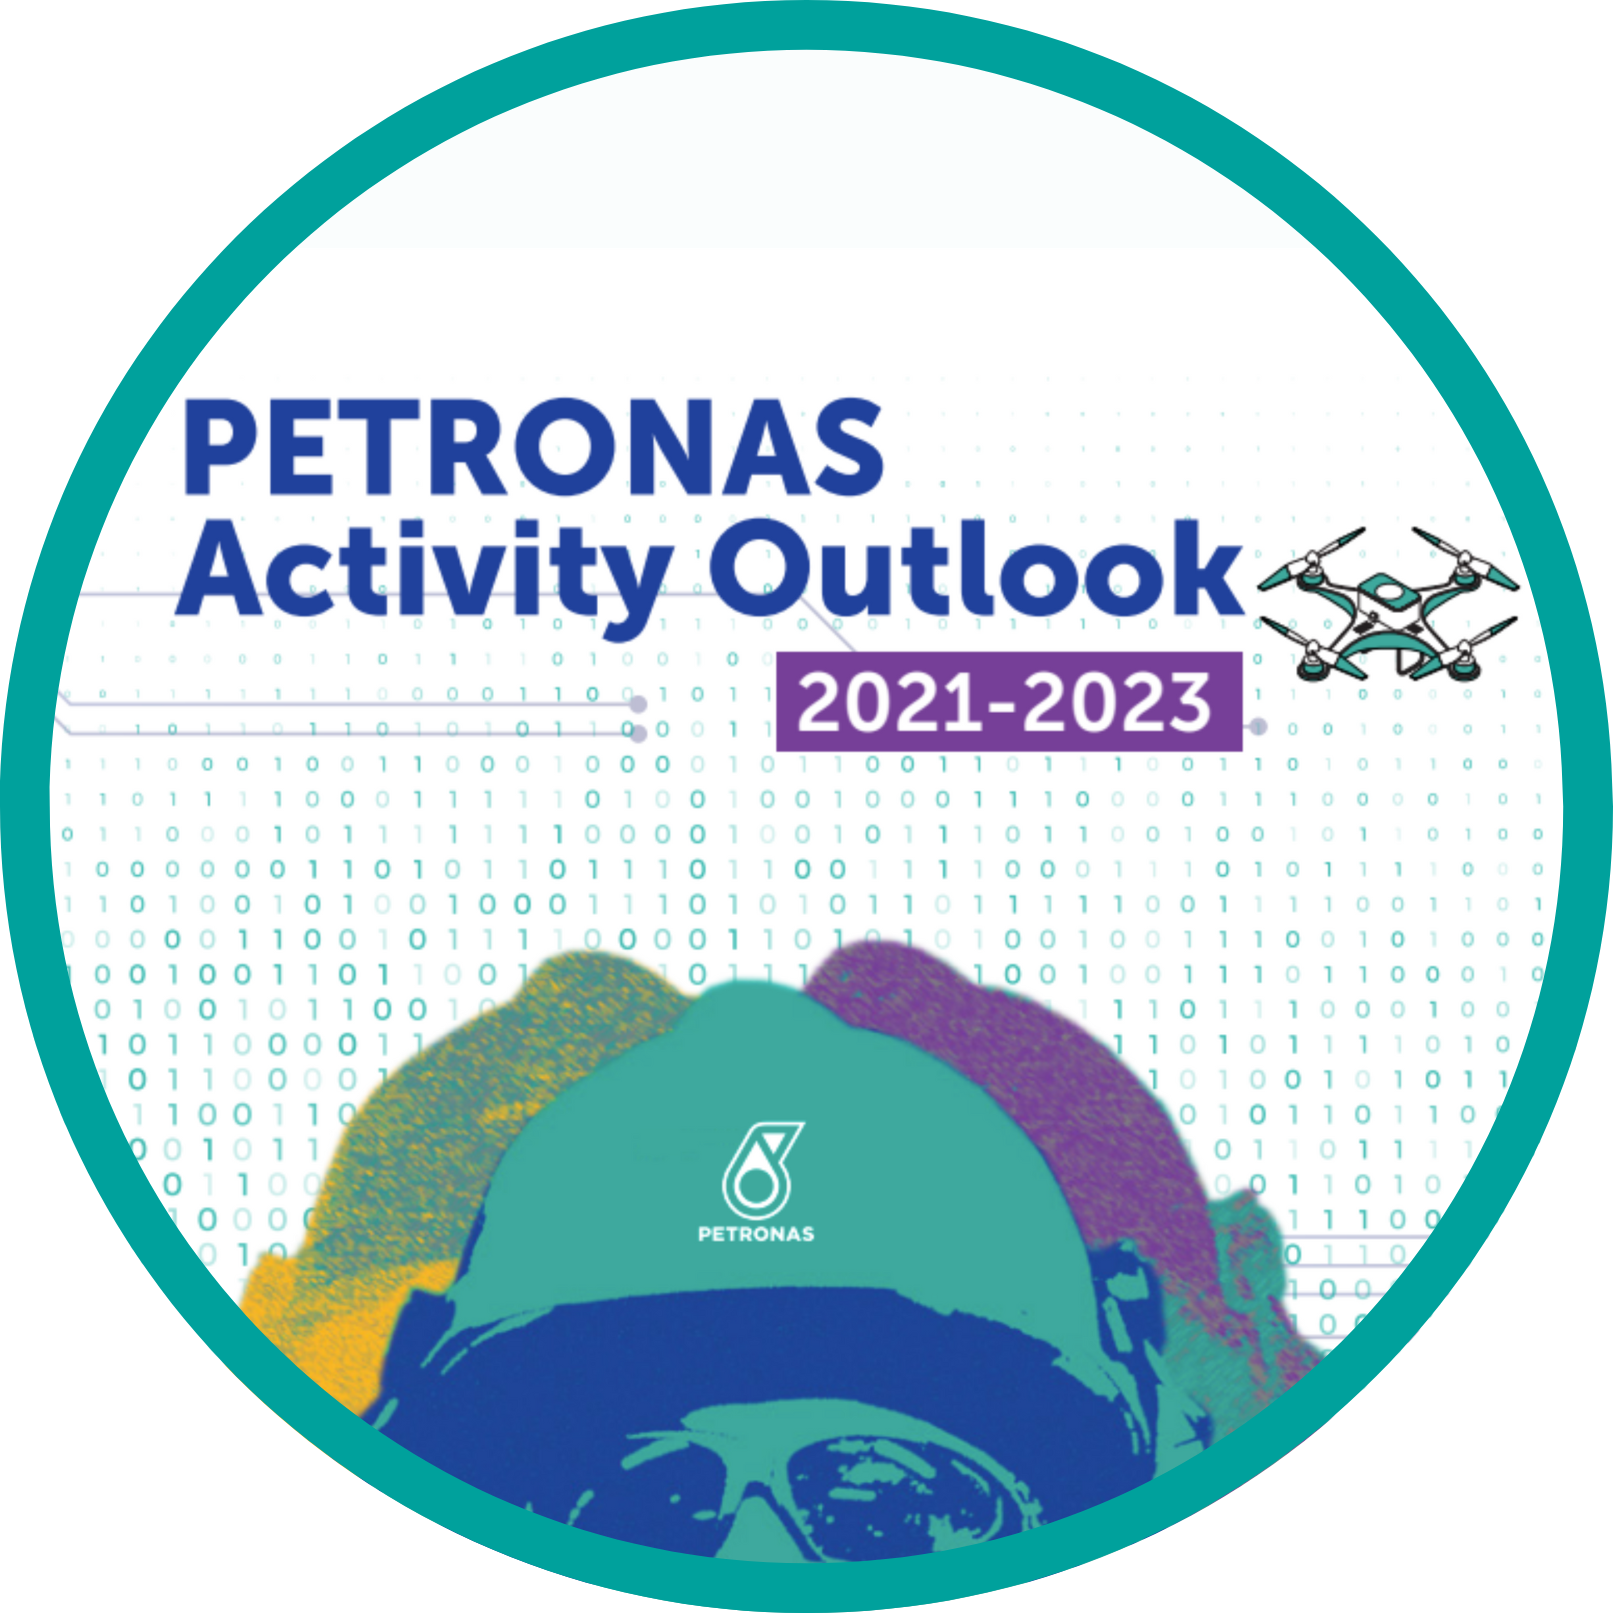 "PETRONAS Activity Outlook 2021-2023"